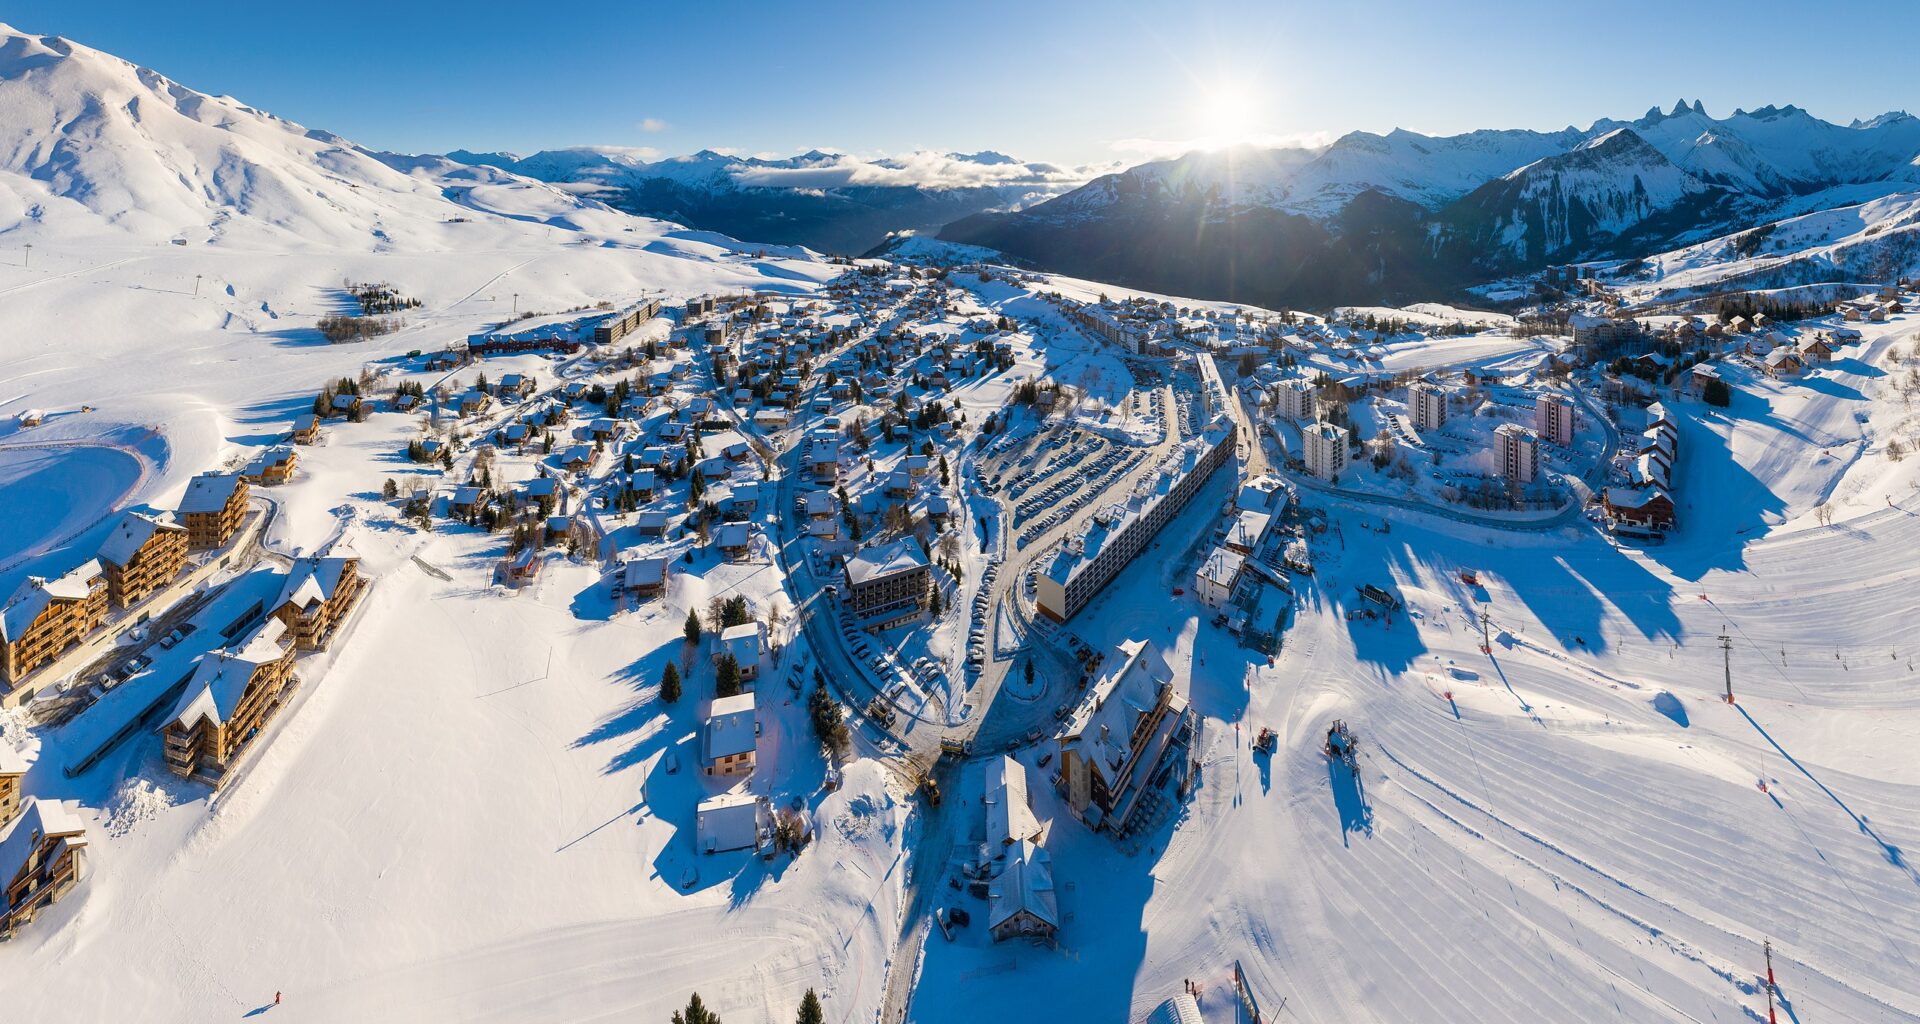 La Toussuire ski resort